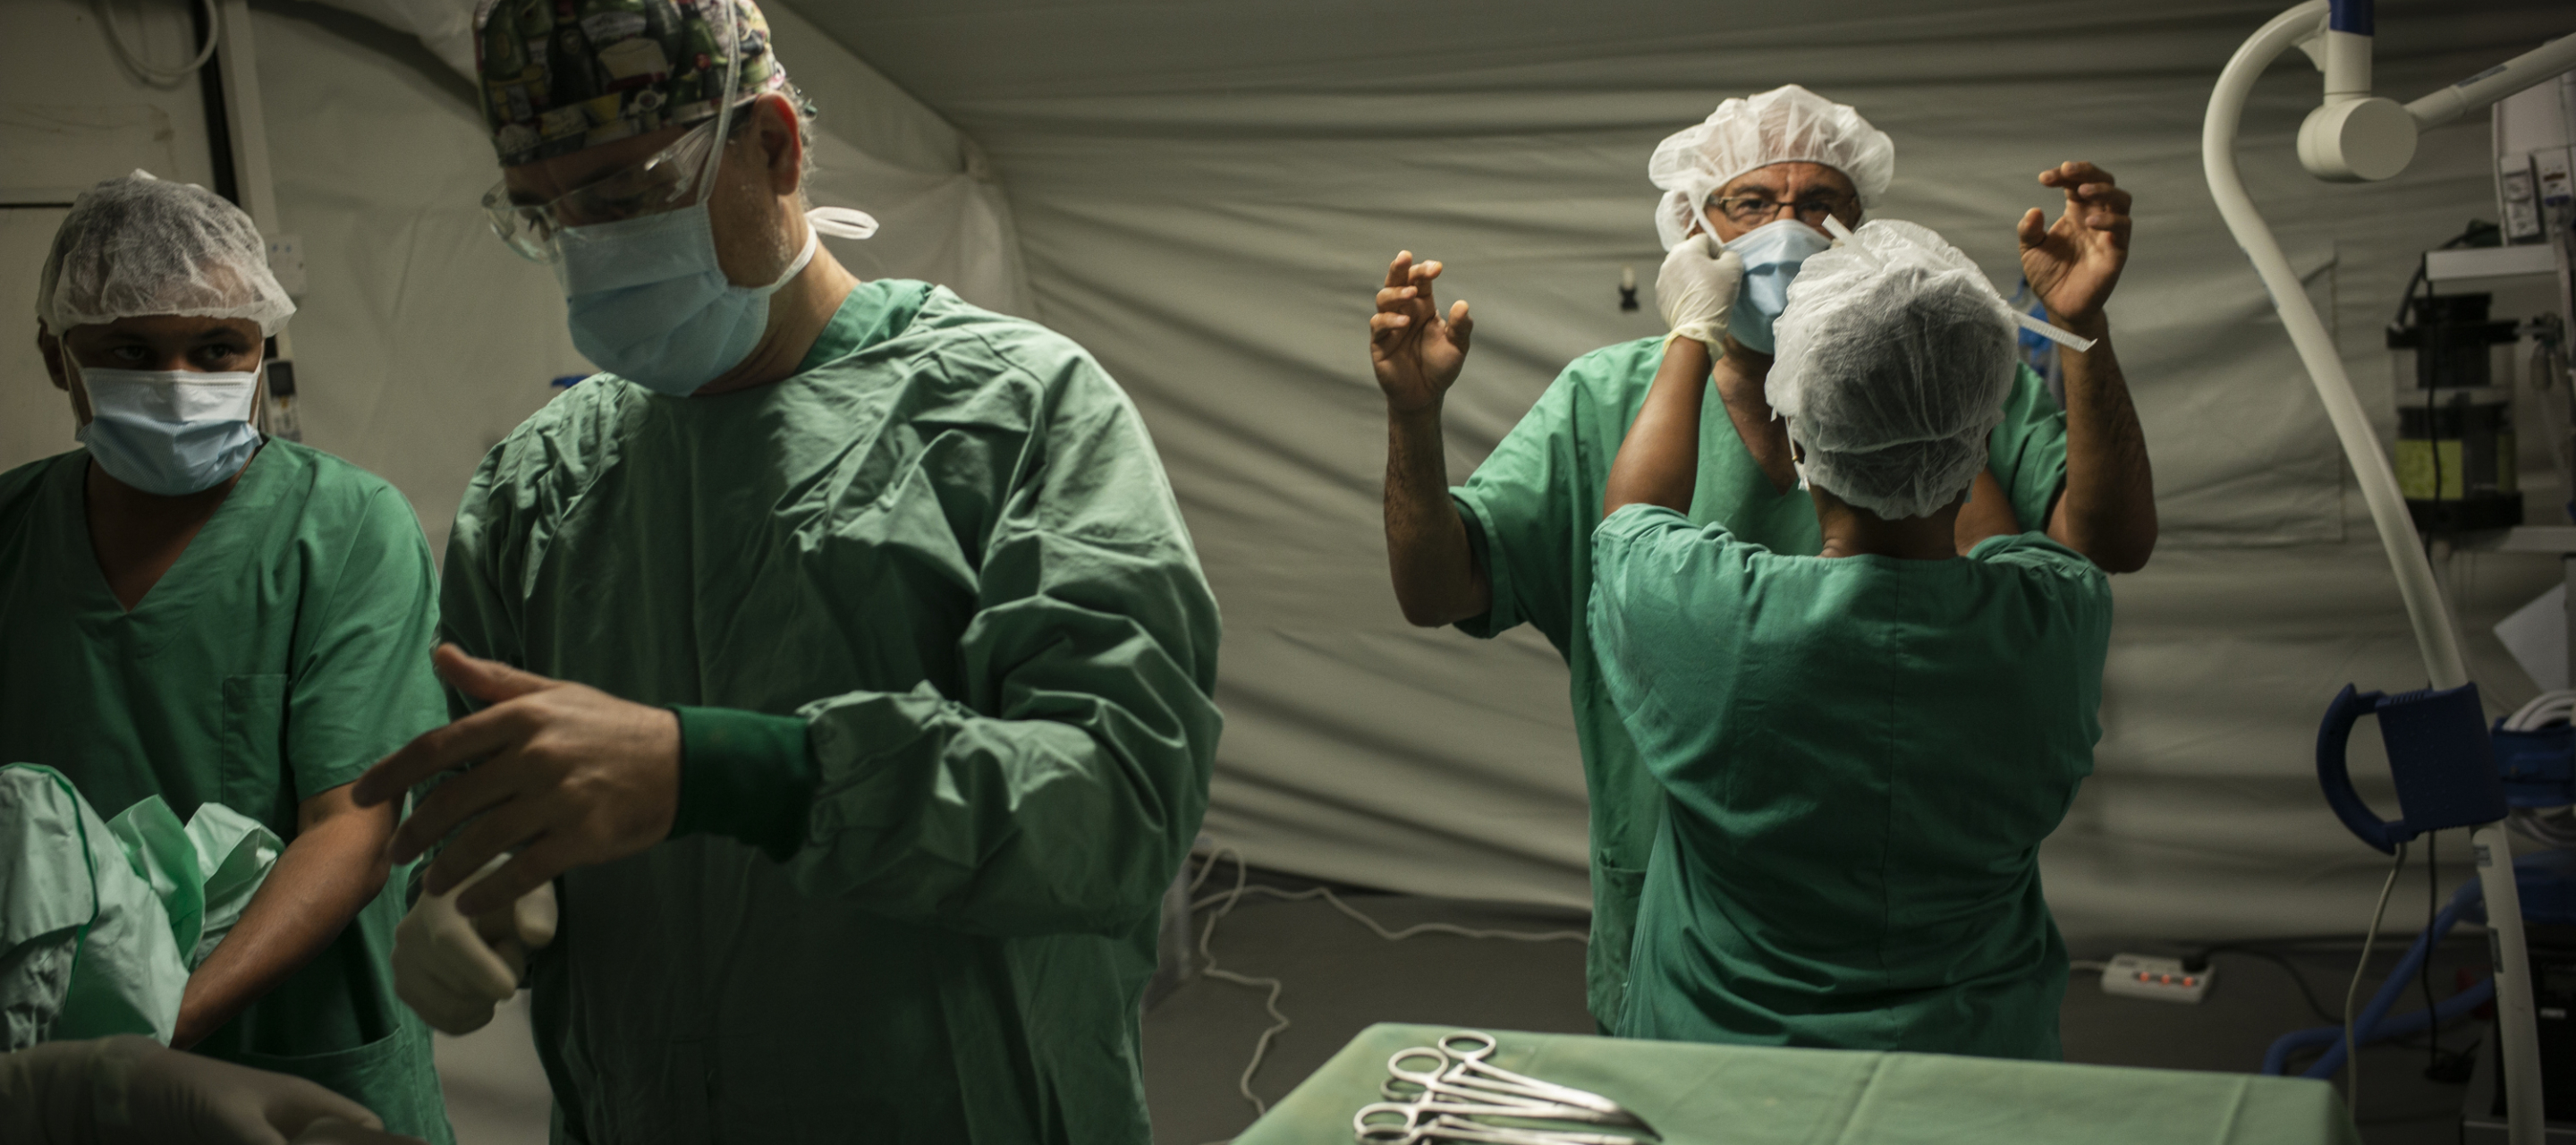 Vorbereitung Chirurgen im OP Saal